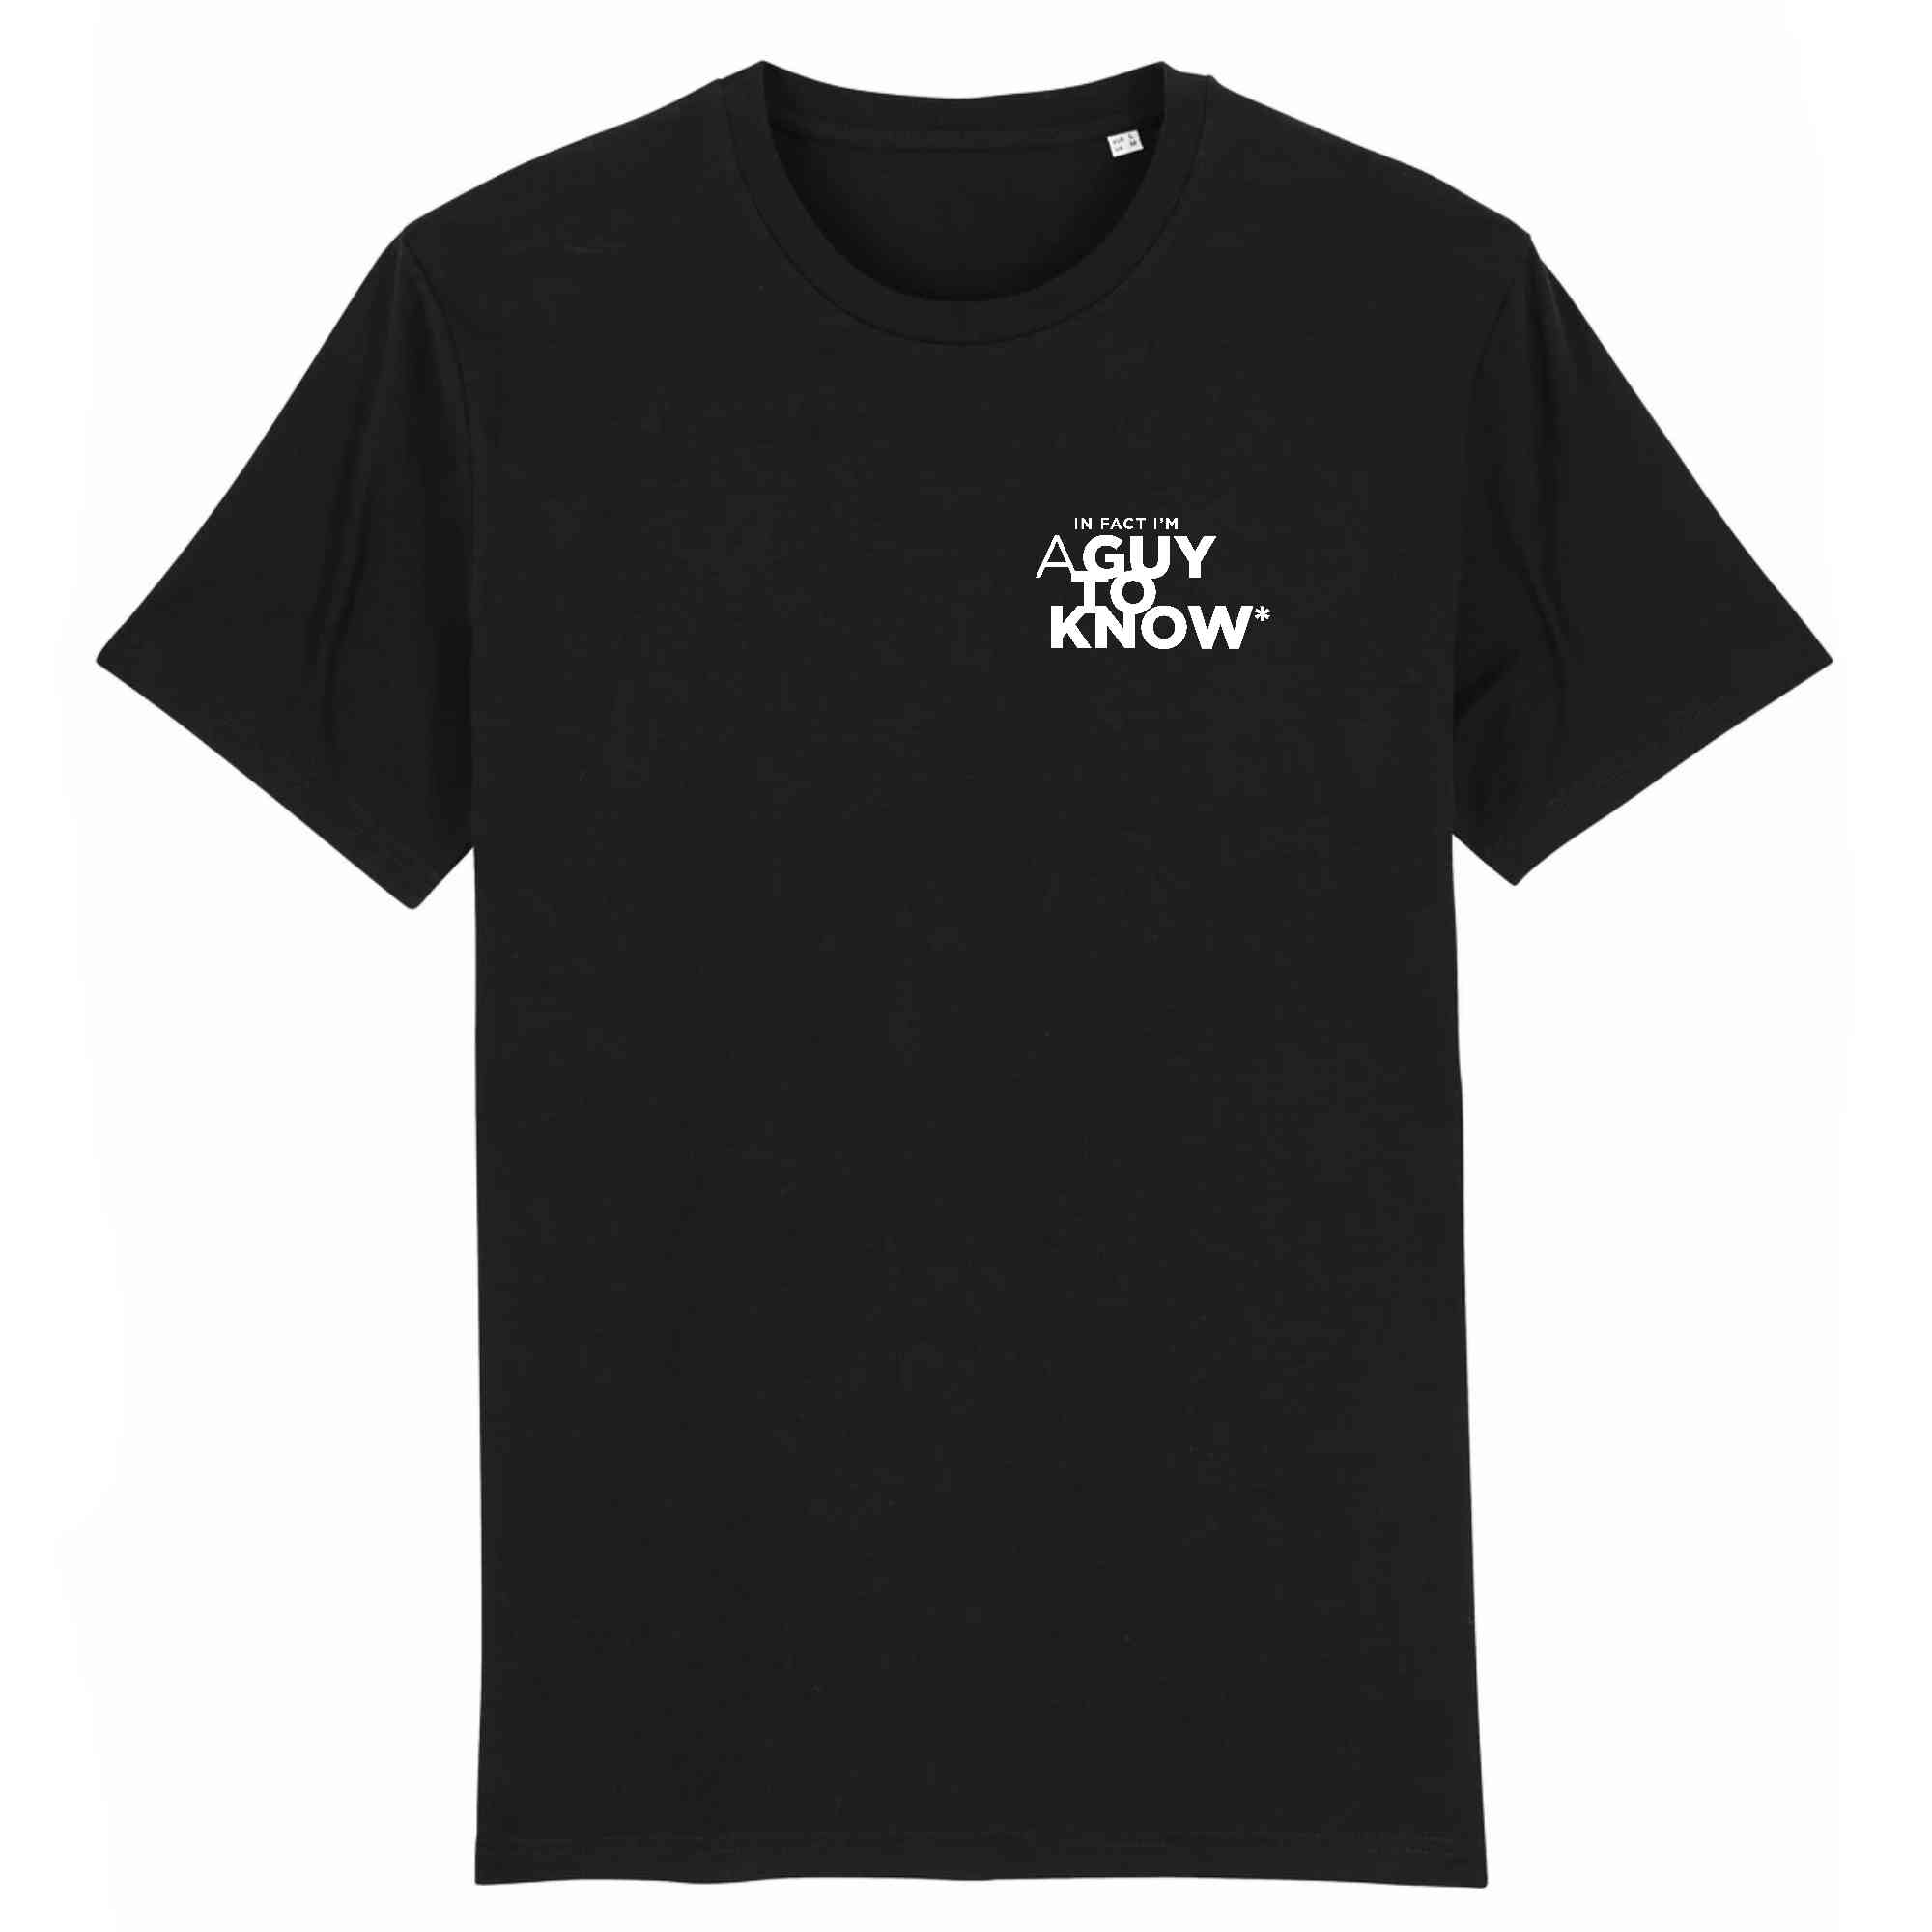 T-Shirt noir A GUY TO KNOW* - Collection tshirt inspirant en plusieurs couleurs